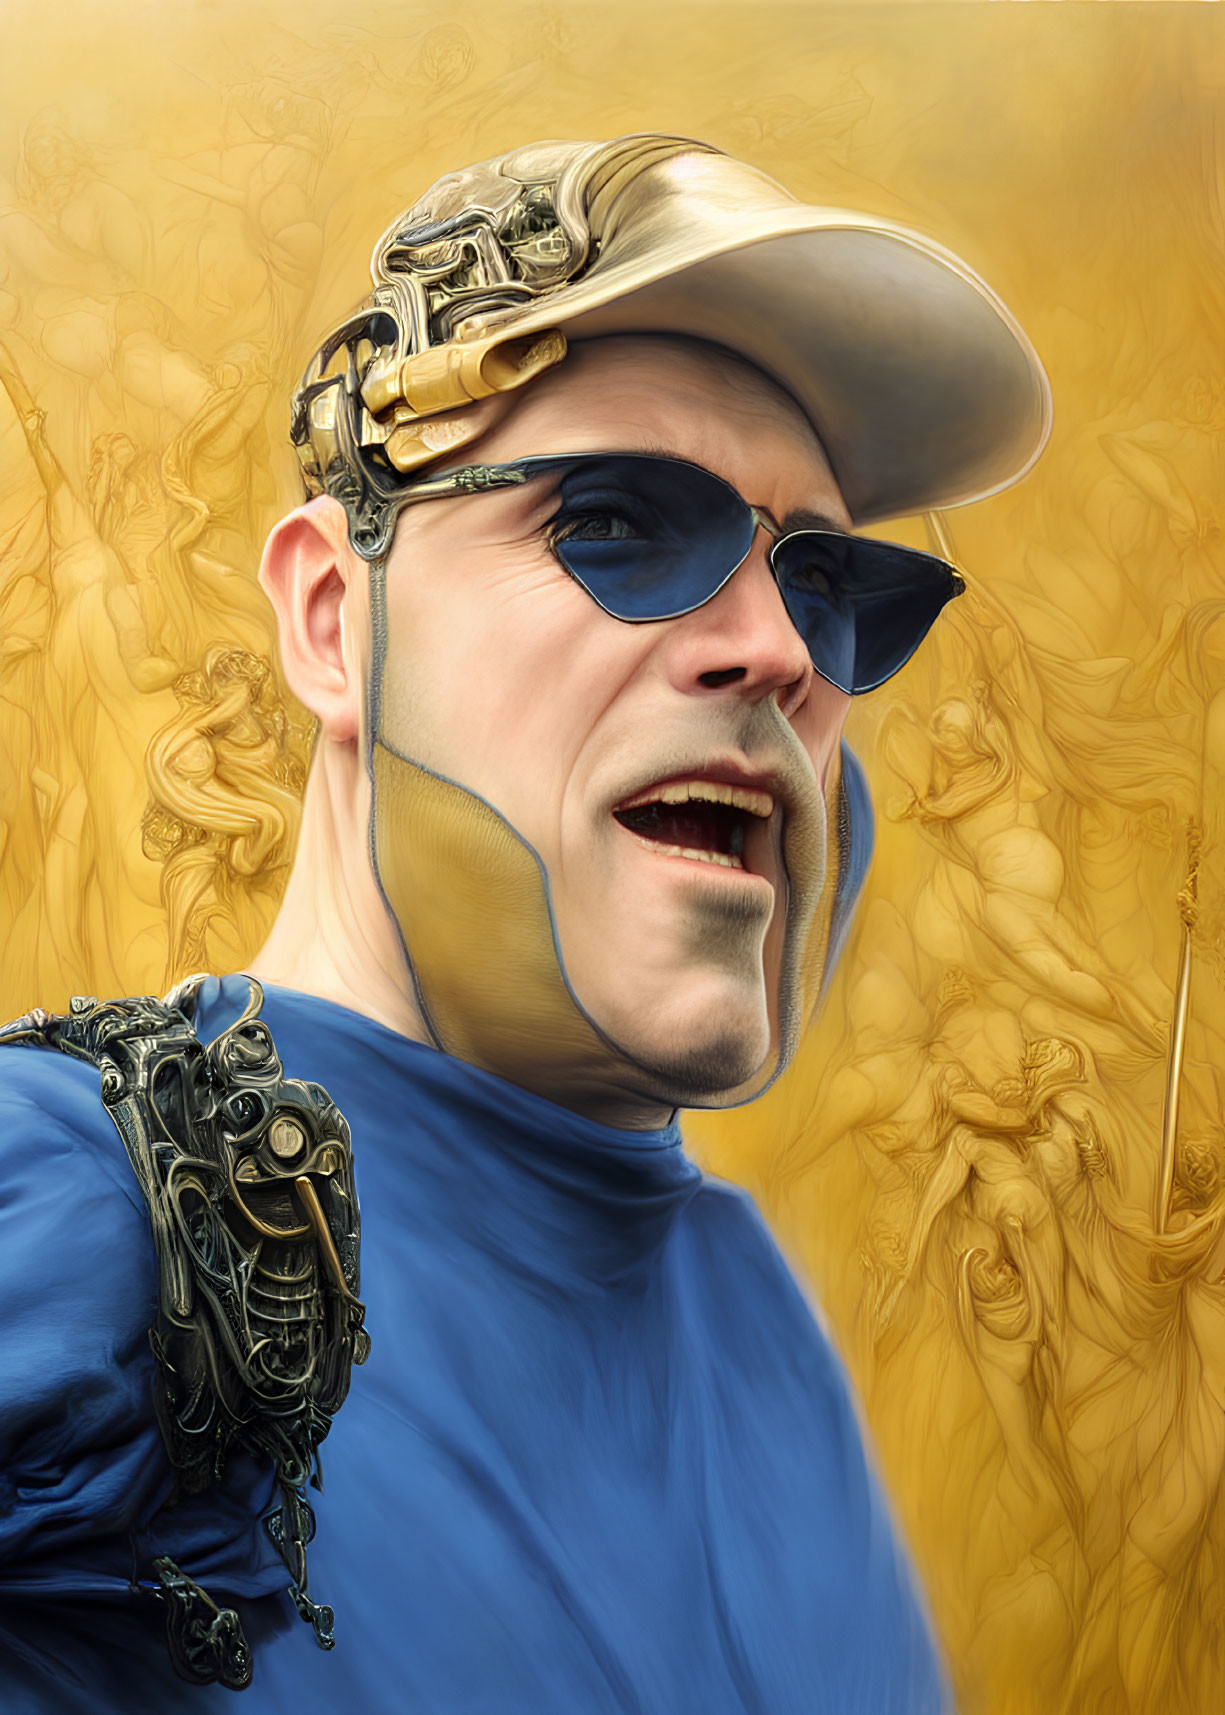 Cybernetic man with mechanical eye and arm in digital artwork